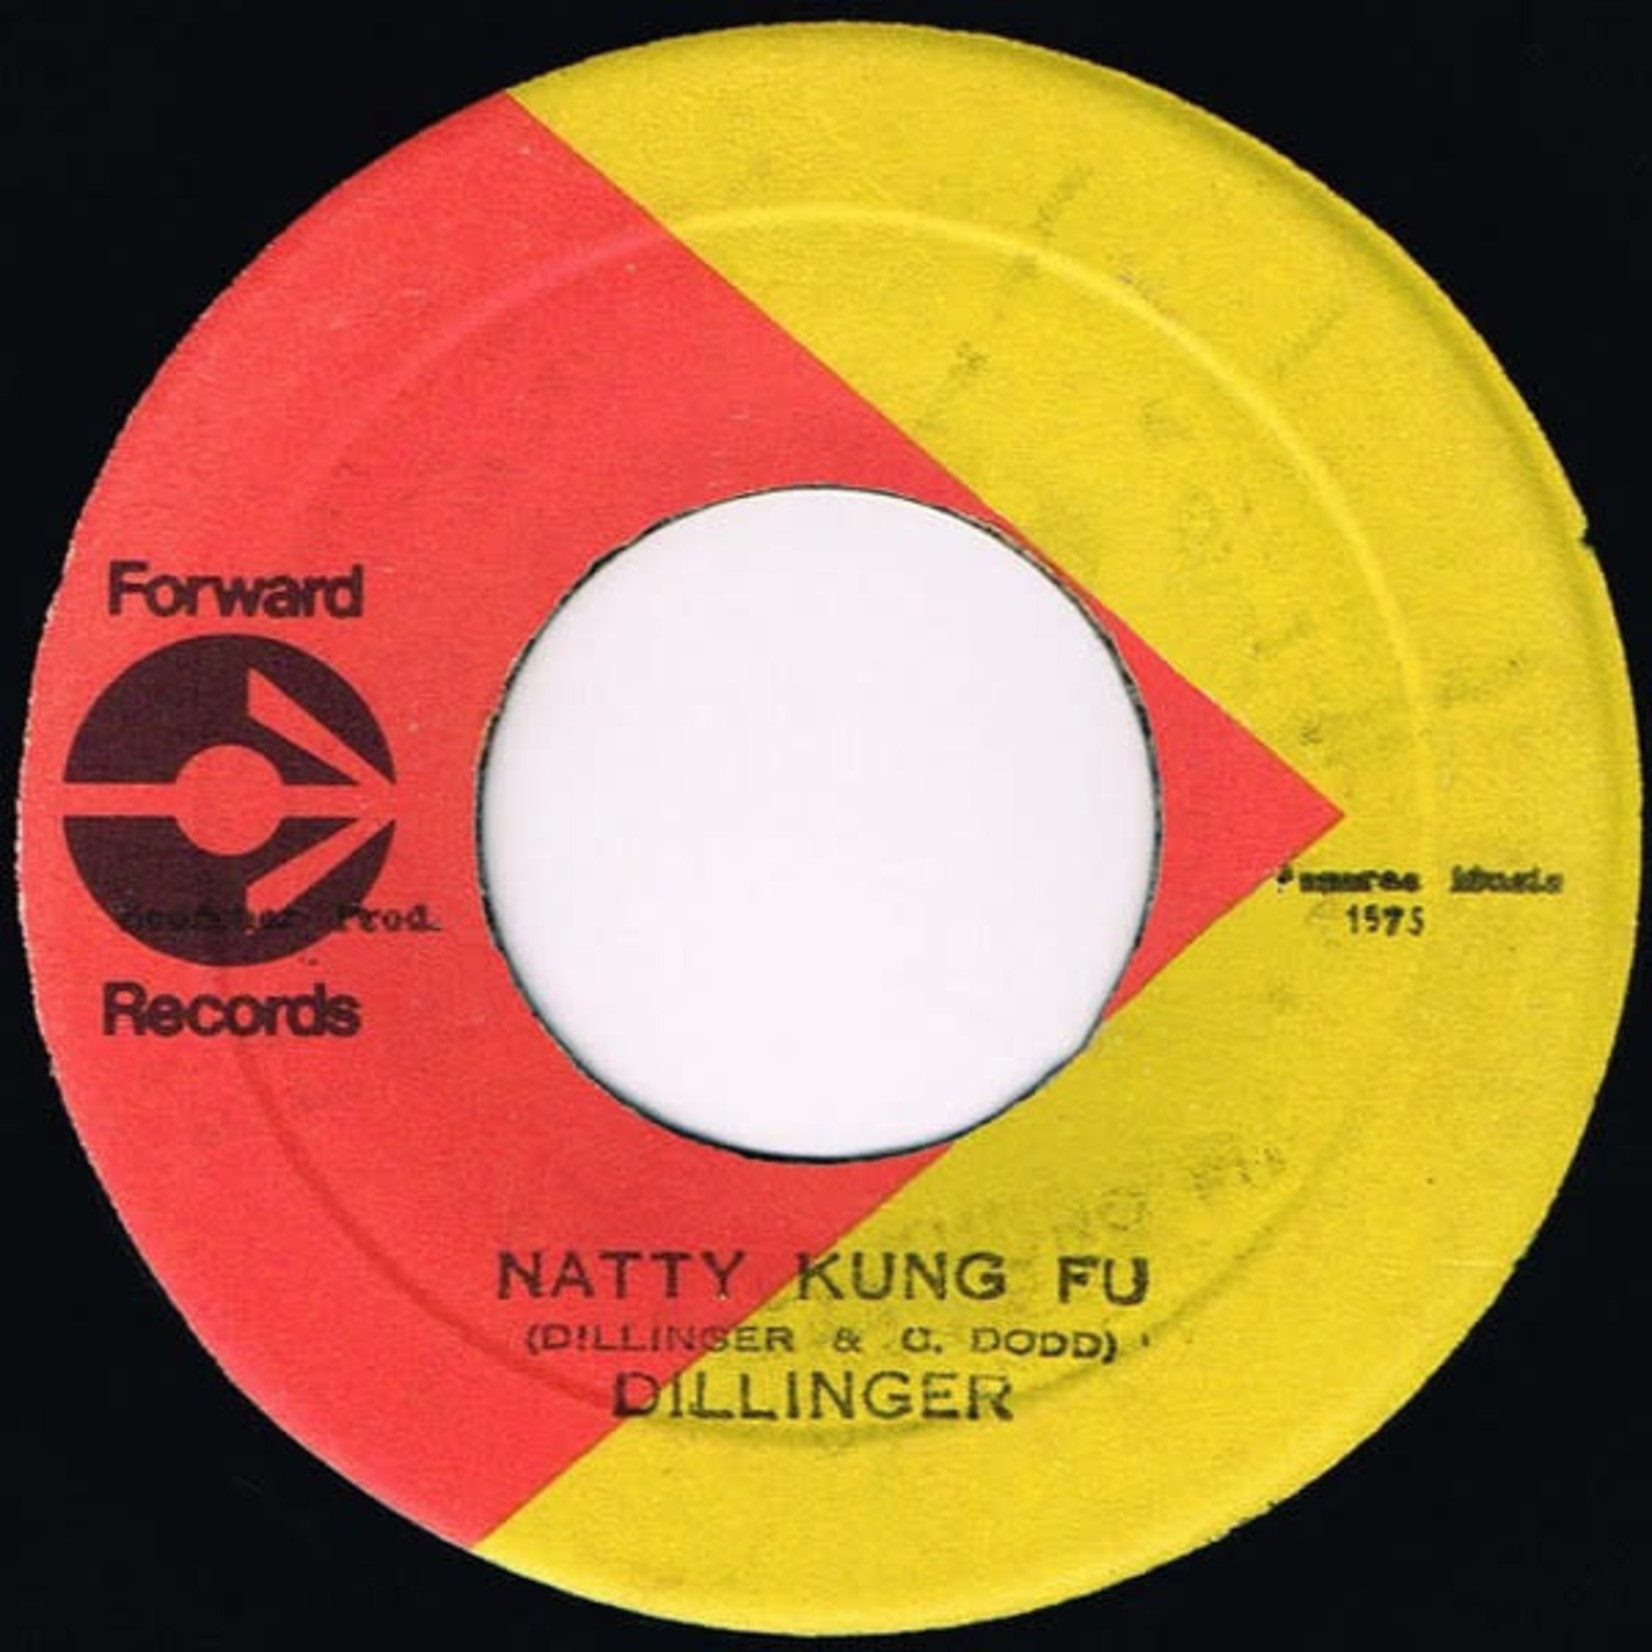 [7"] Dillinger - Natty Kung Fu (7", 1975 Jamaica, VG+)